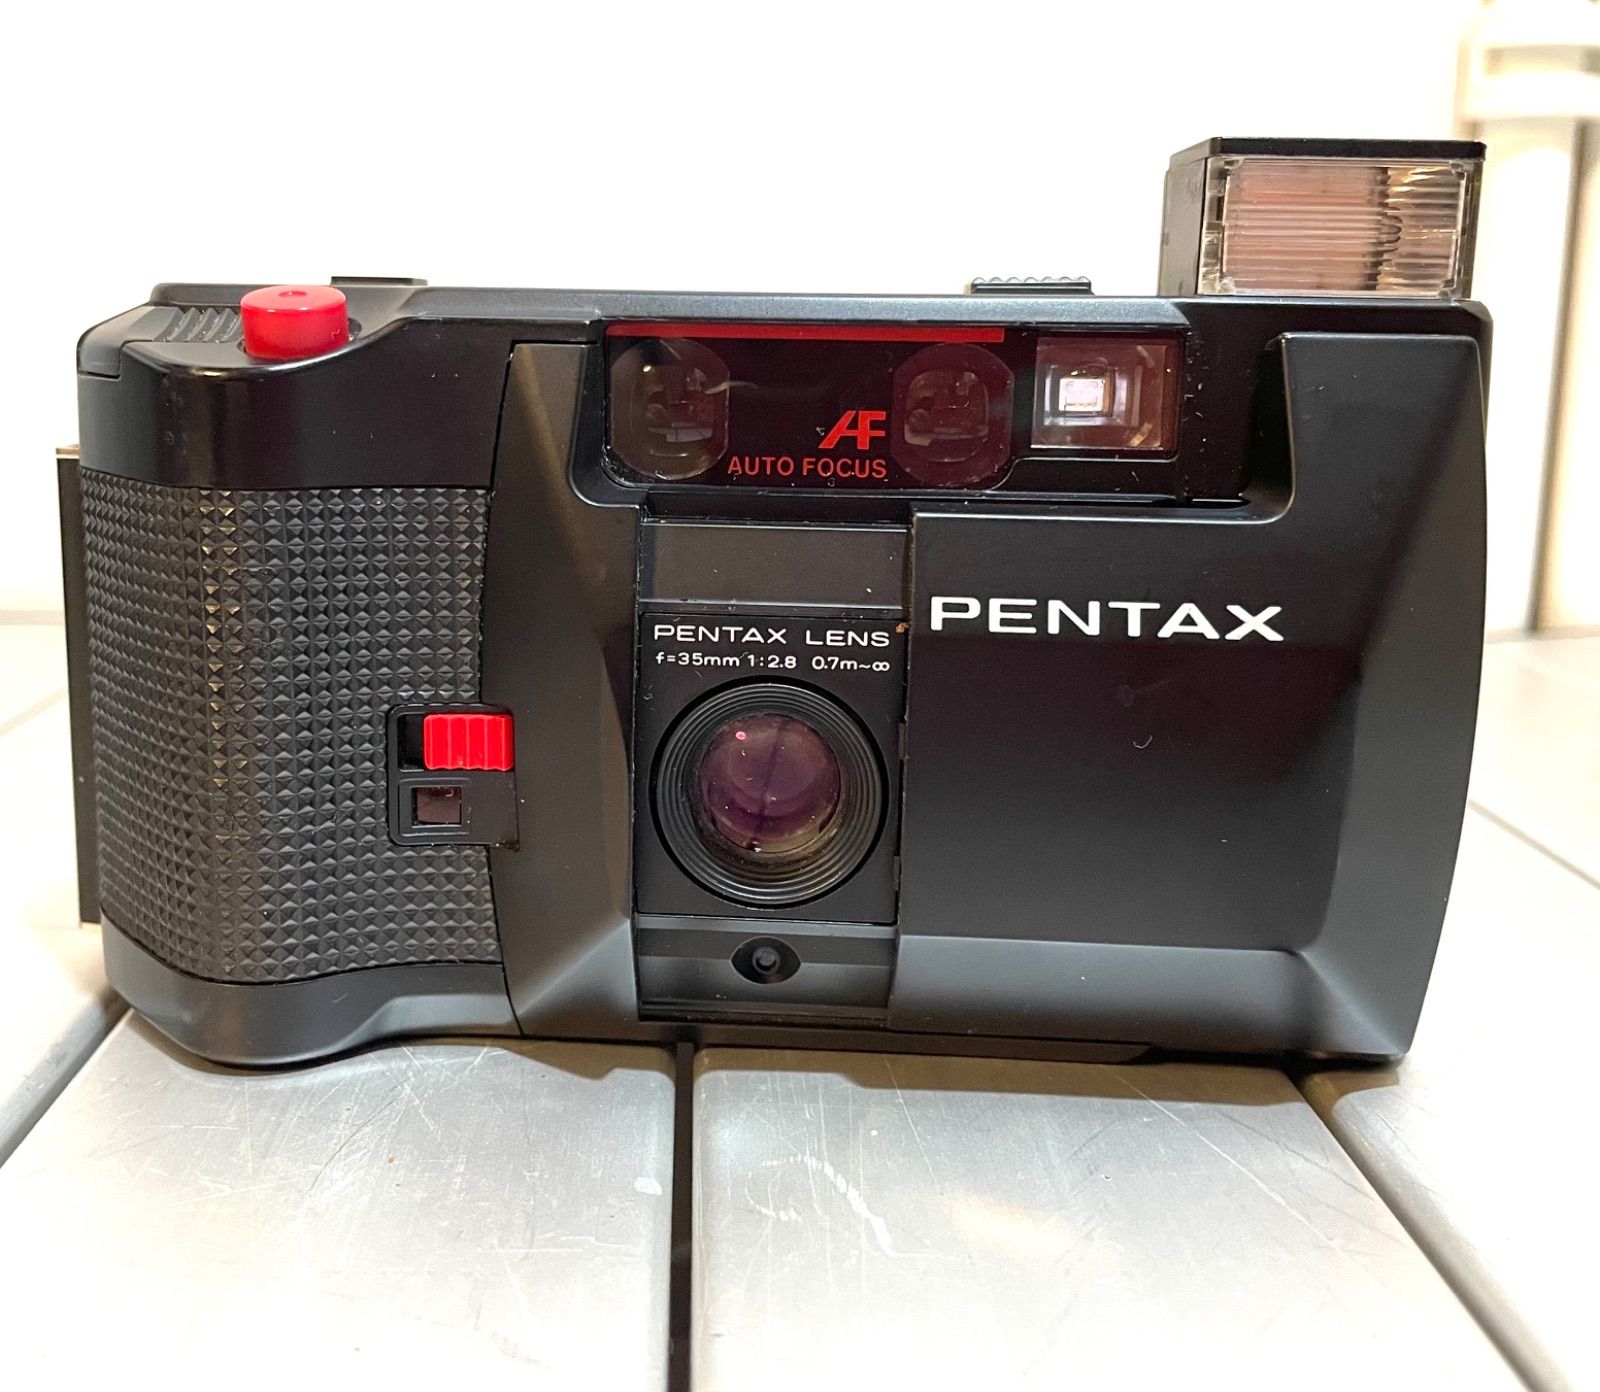 rrkk2385 PENTAX ペンタックス PC35 AF-M DATE 35mmF2.8 現状品 コンパクトフィルムカメラ - カメラ、光学機器